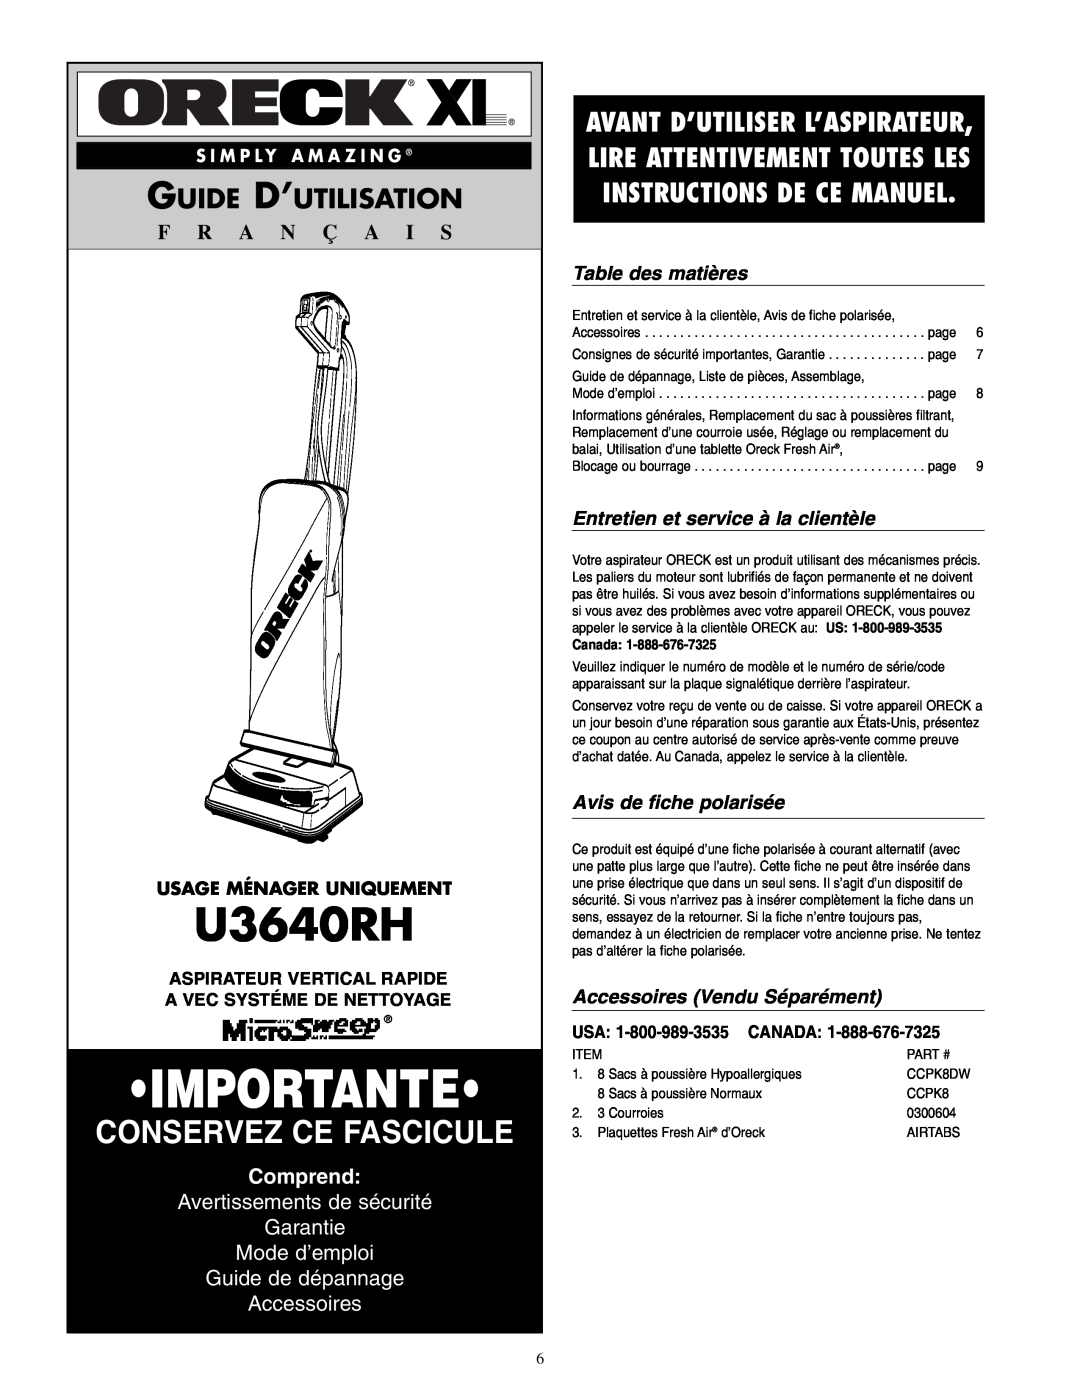 Oreck U3640RH warranty Importante, Guide D’Utilisation, Comprend, Avertissements de sécurité Garantie Mode d’emploi, Canada 